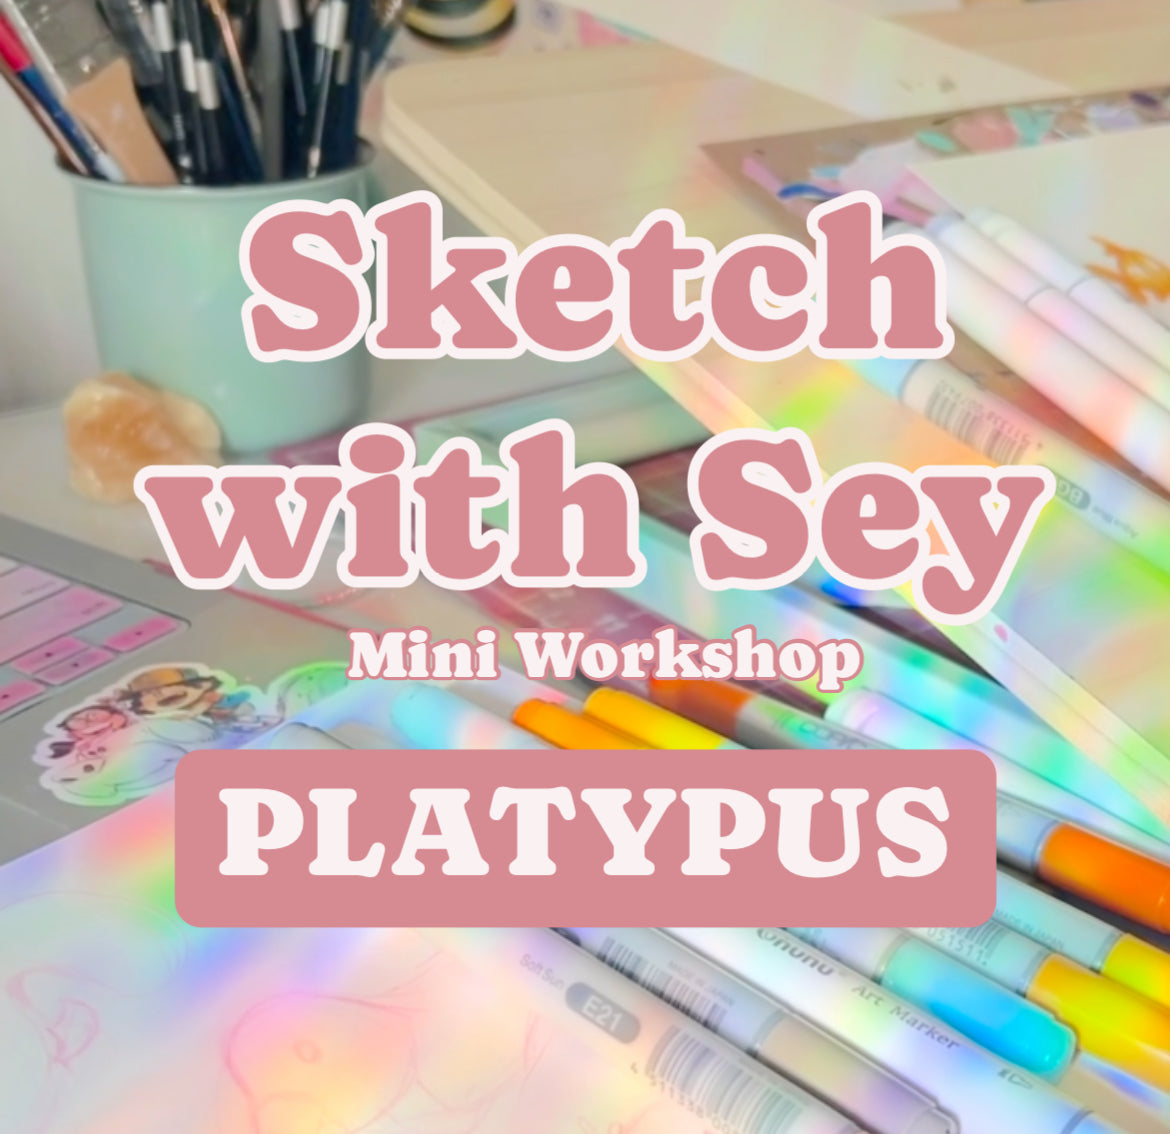 Sketch with Sey Mini Workshop - Platypus